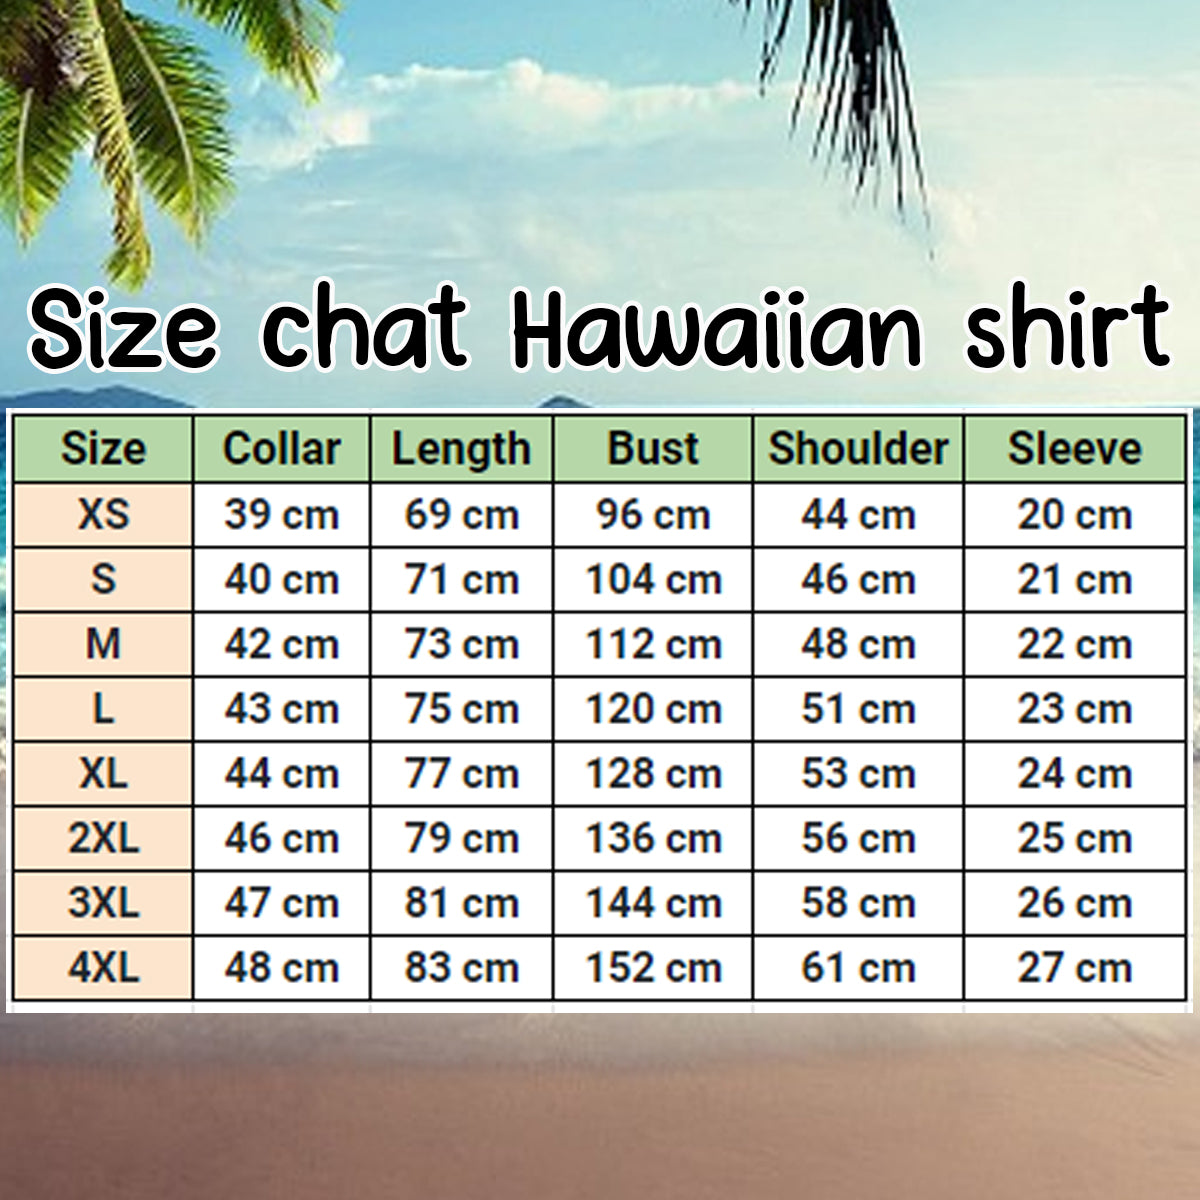 Heart Shape And Pomeranian Dog Lovers Gift Ideas Summer Beach Palm Tree Hawaiian Shirt